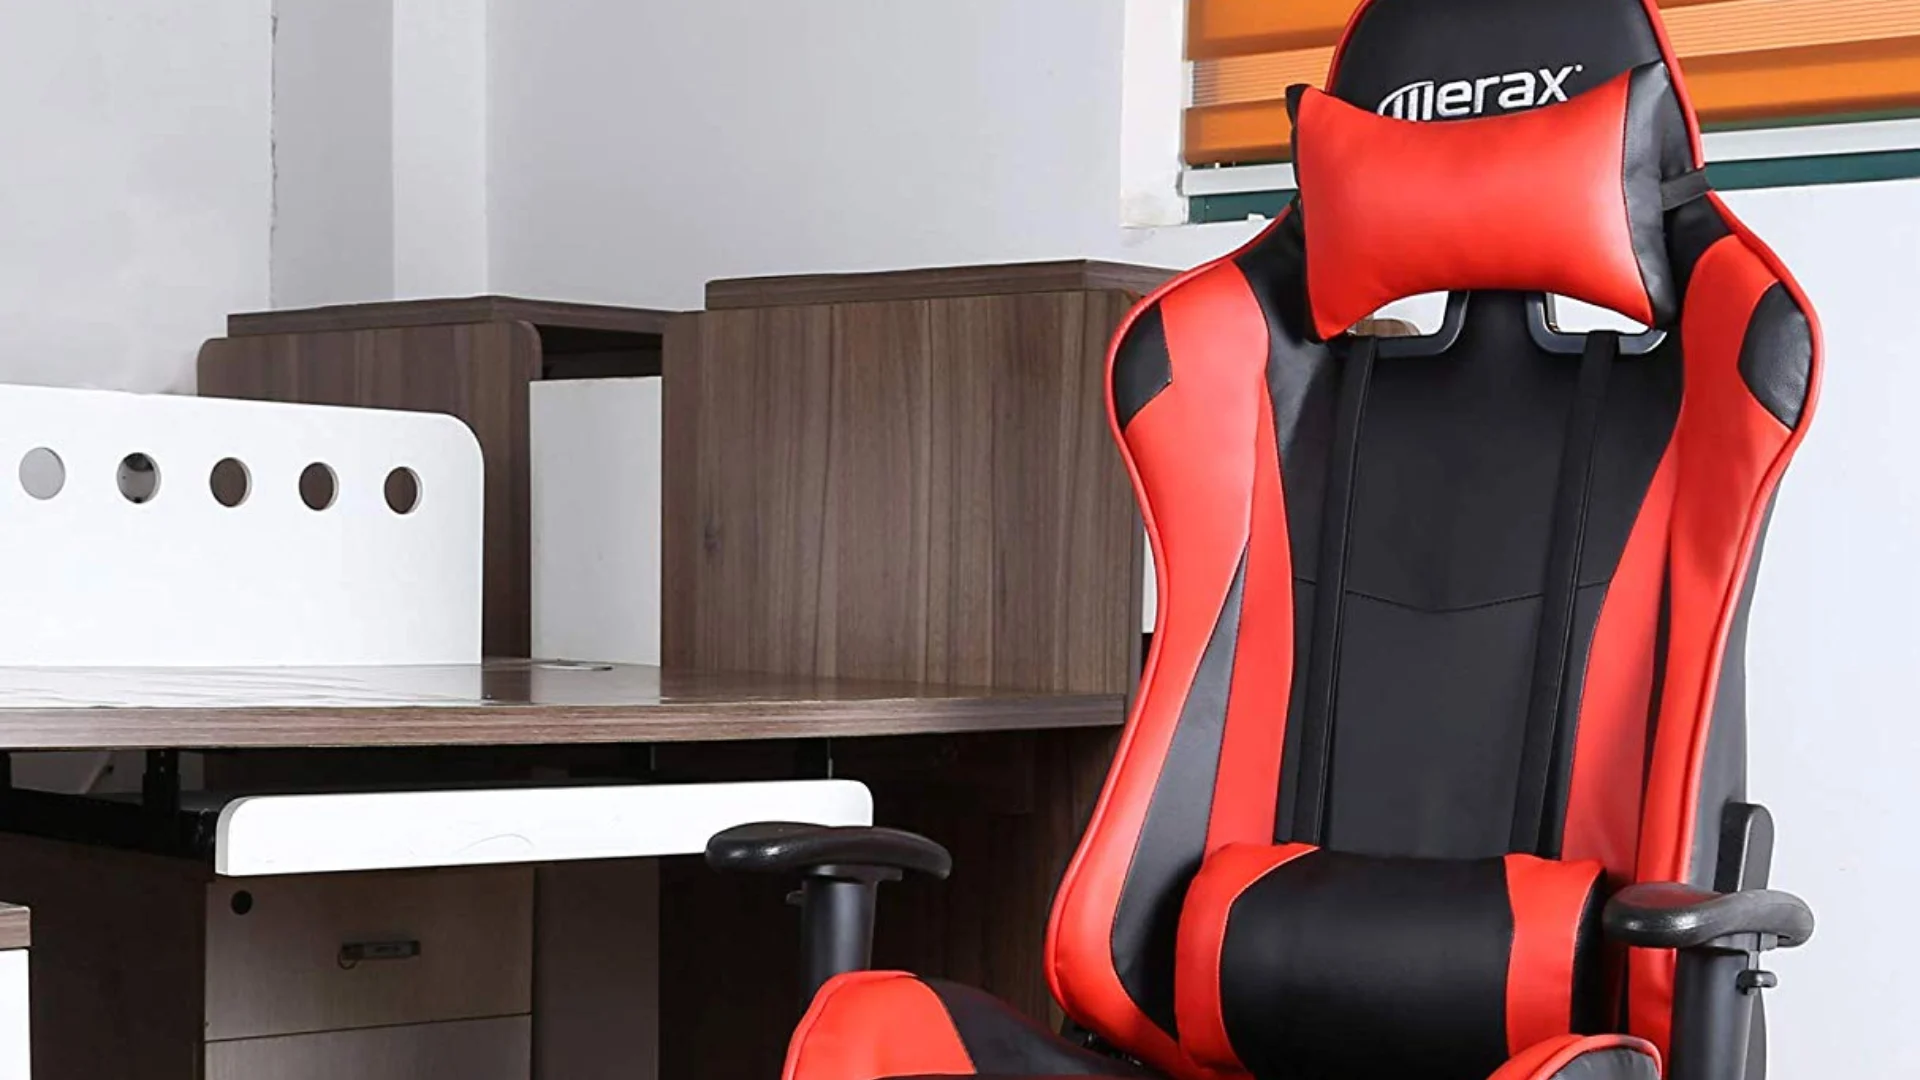 Merax Gaming Chair Review